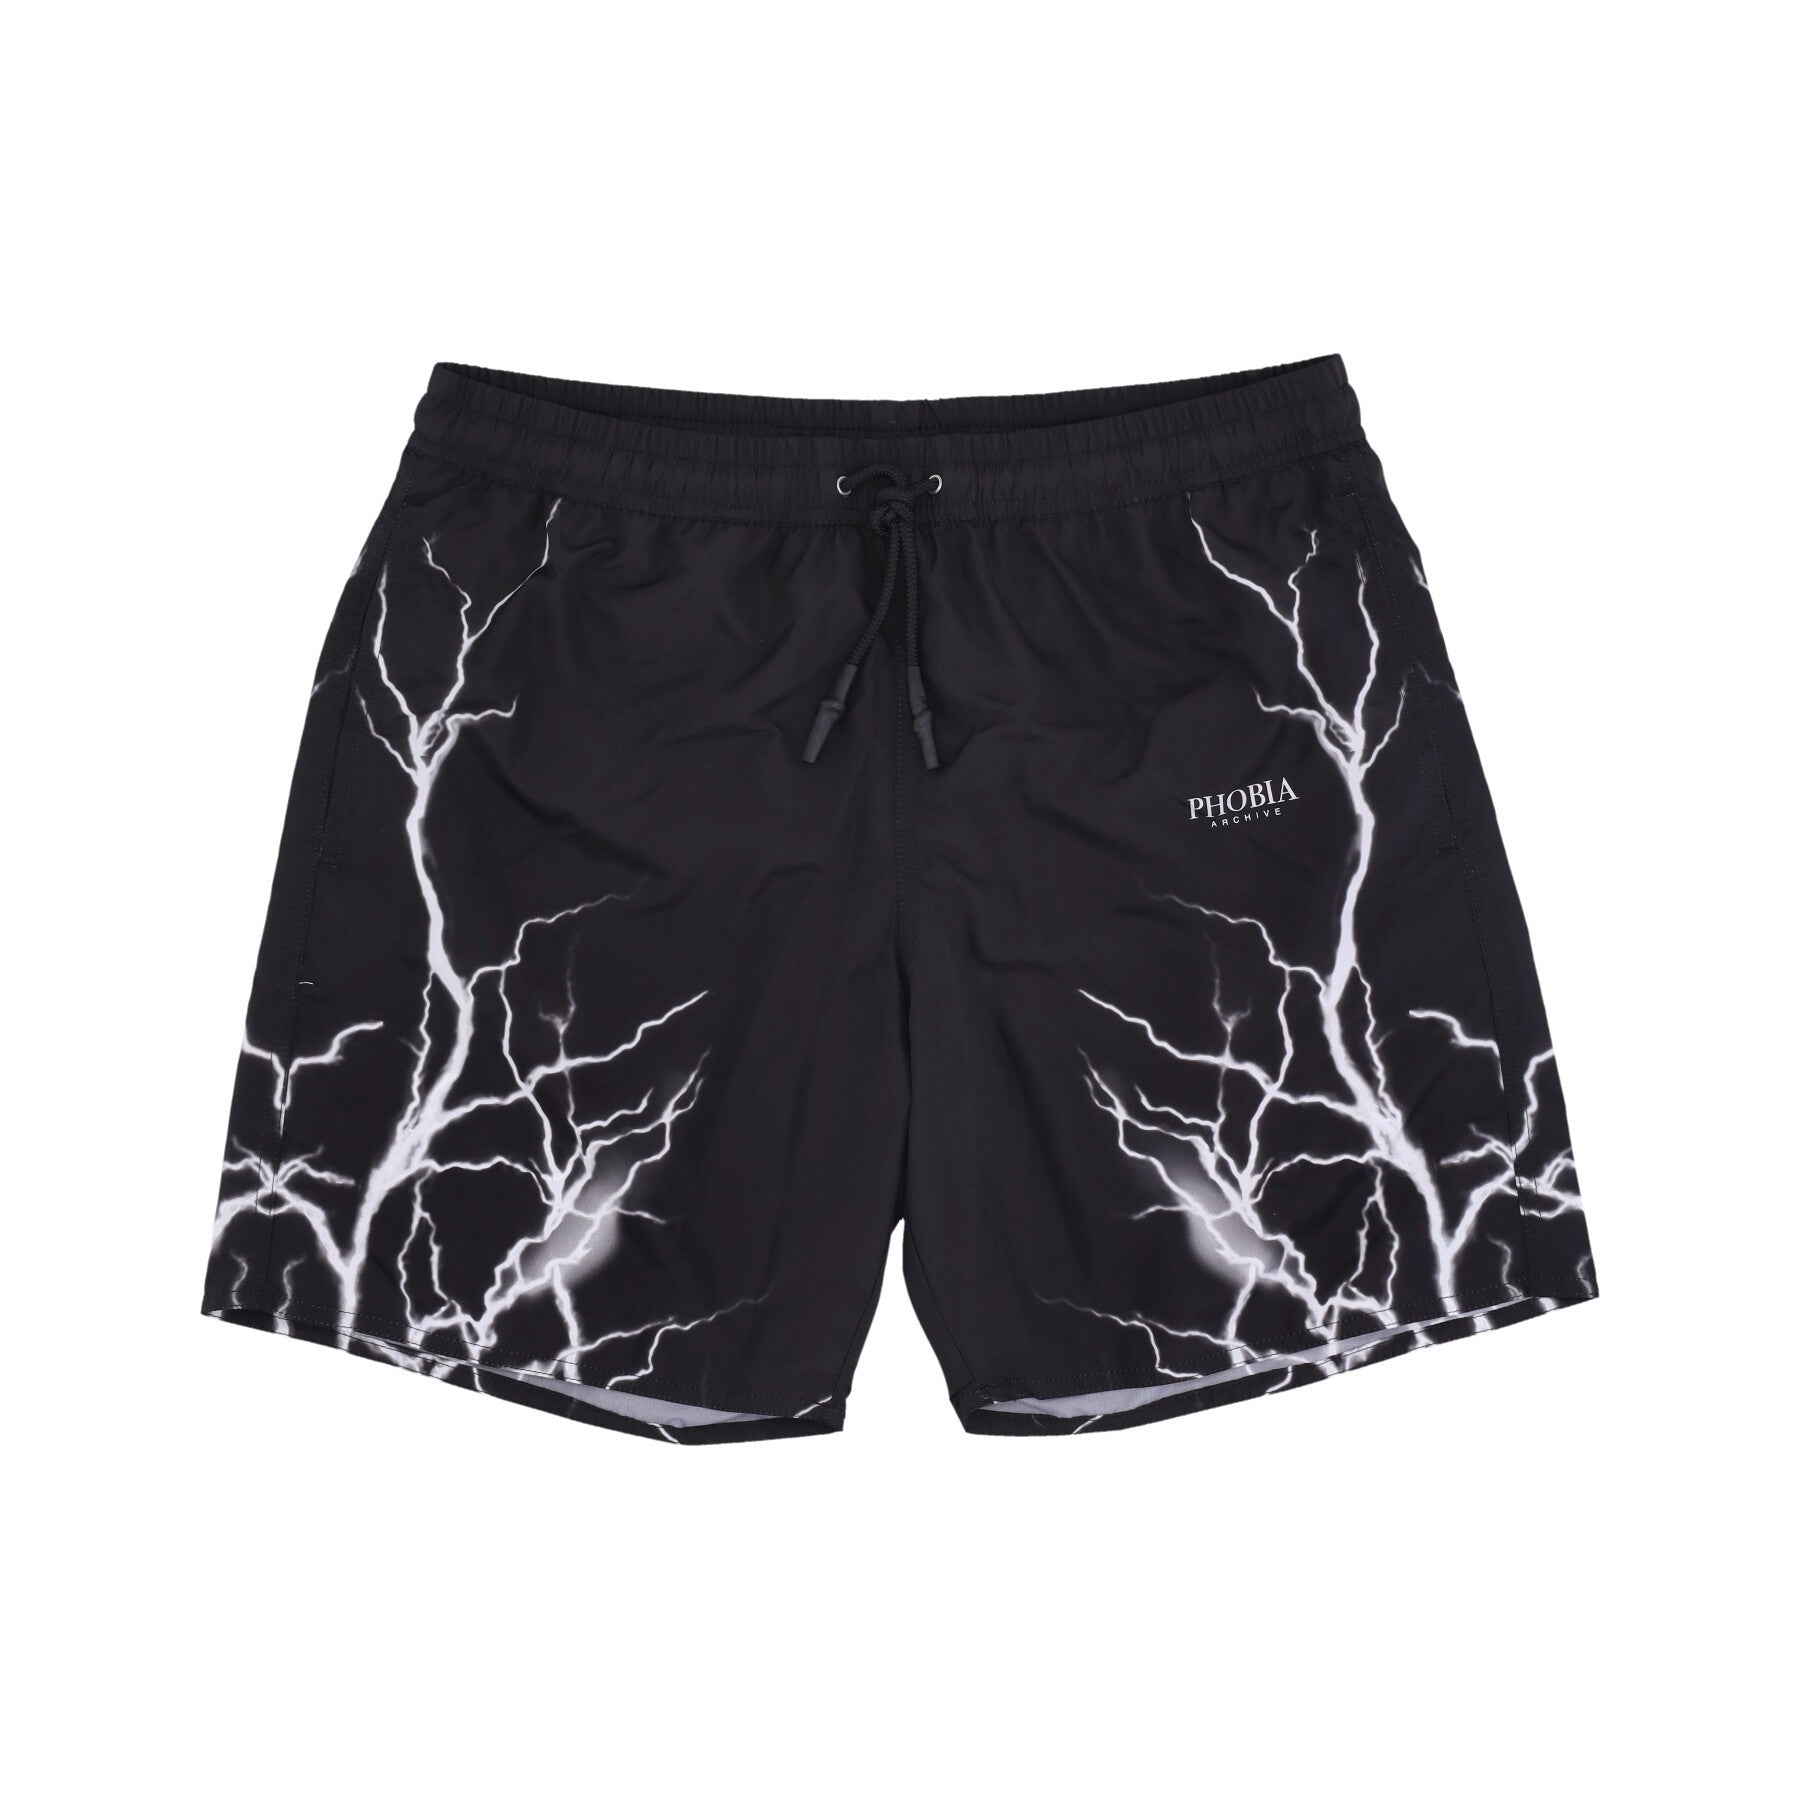 Phobia, Costume Pantaloncino Uomo Lightning Swimwear, Black/grey